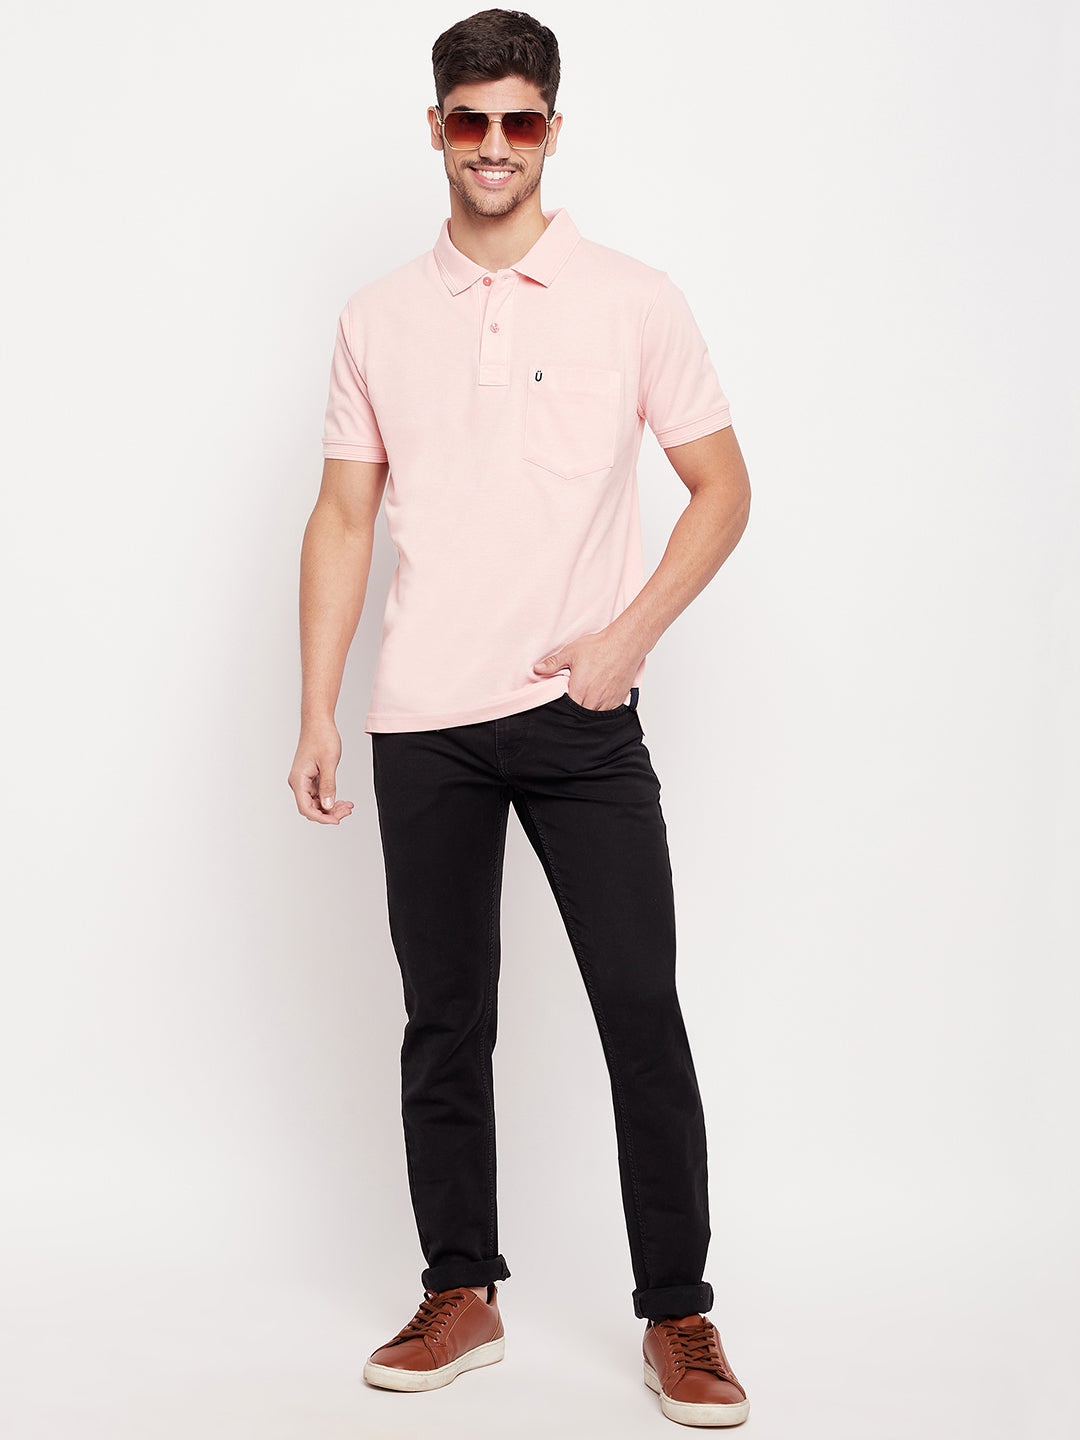 Soft pink polo shirt